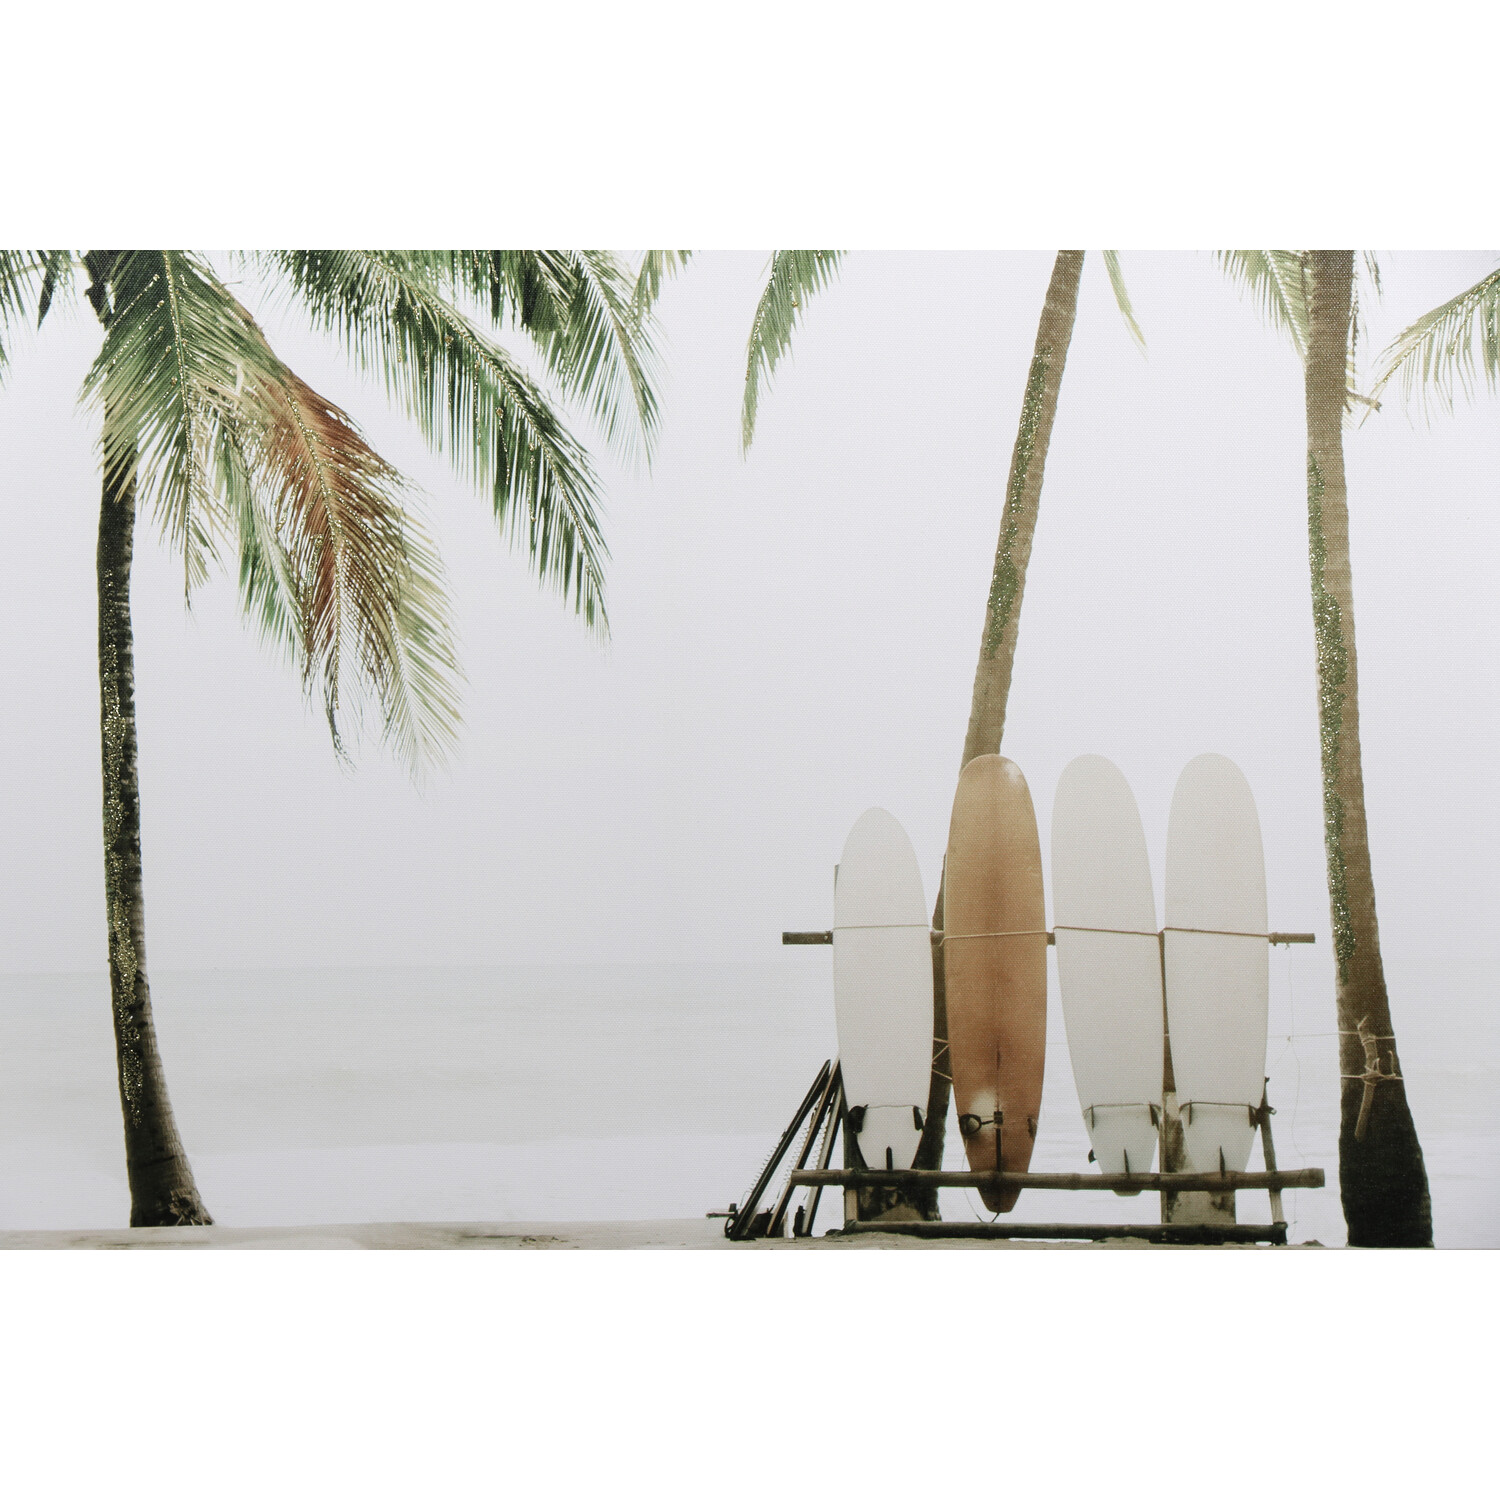 Tropical Beach Landscape Framed Canvas Image 2